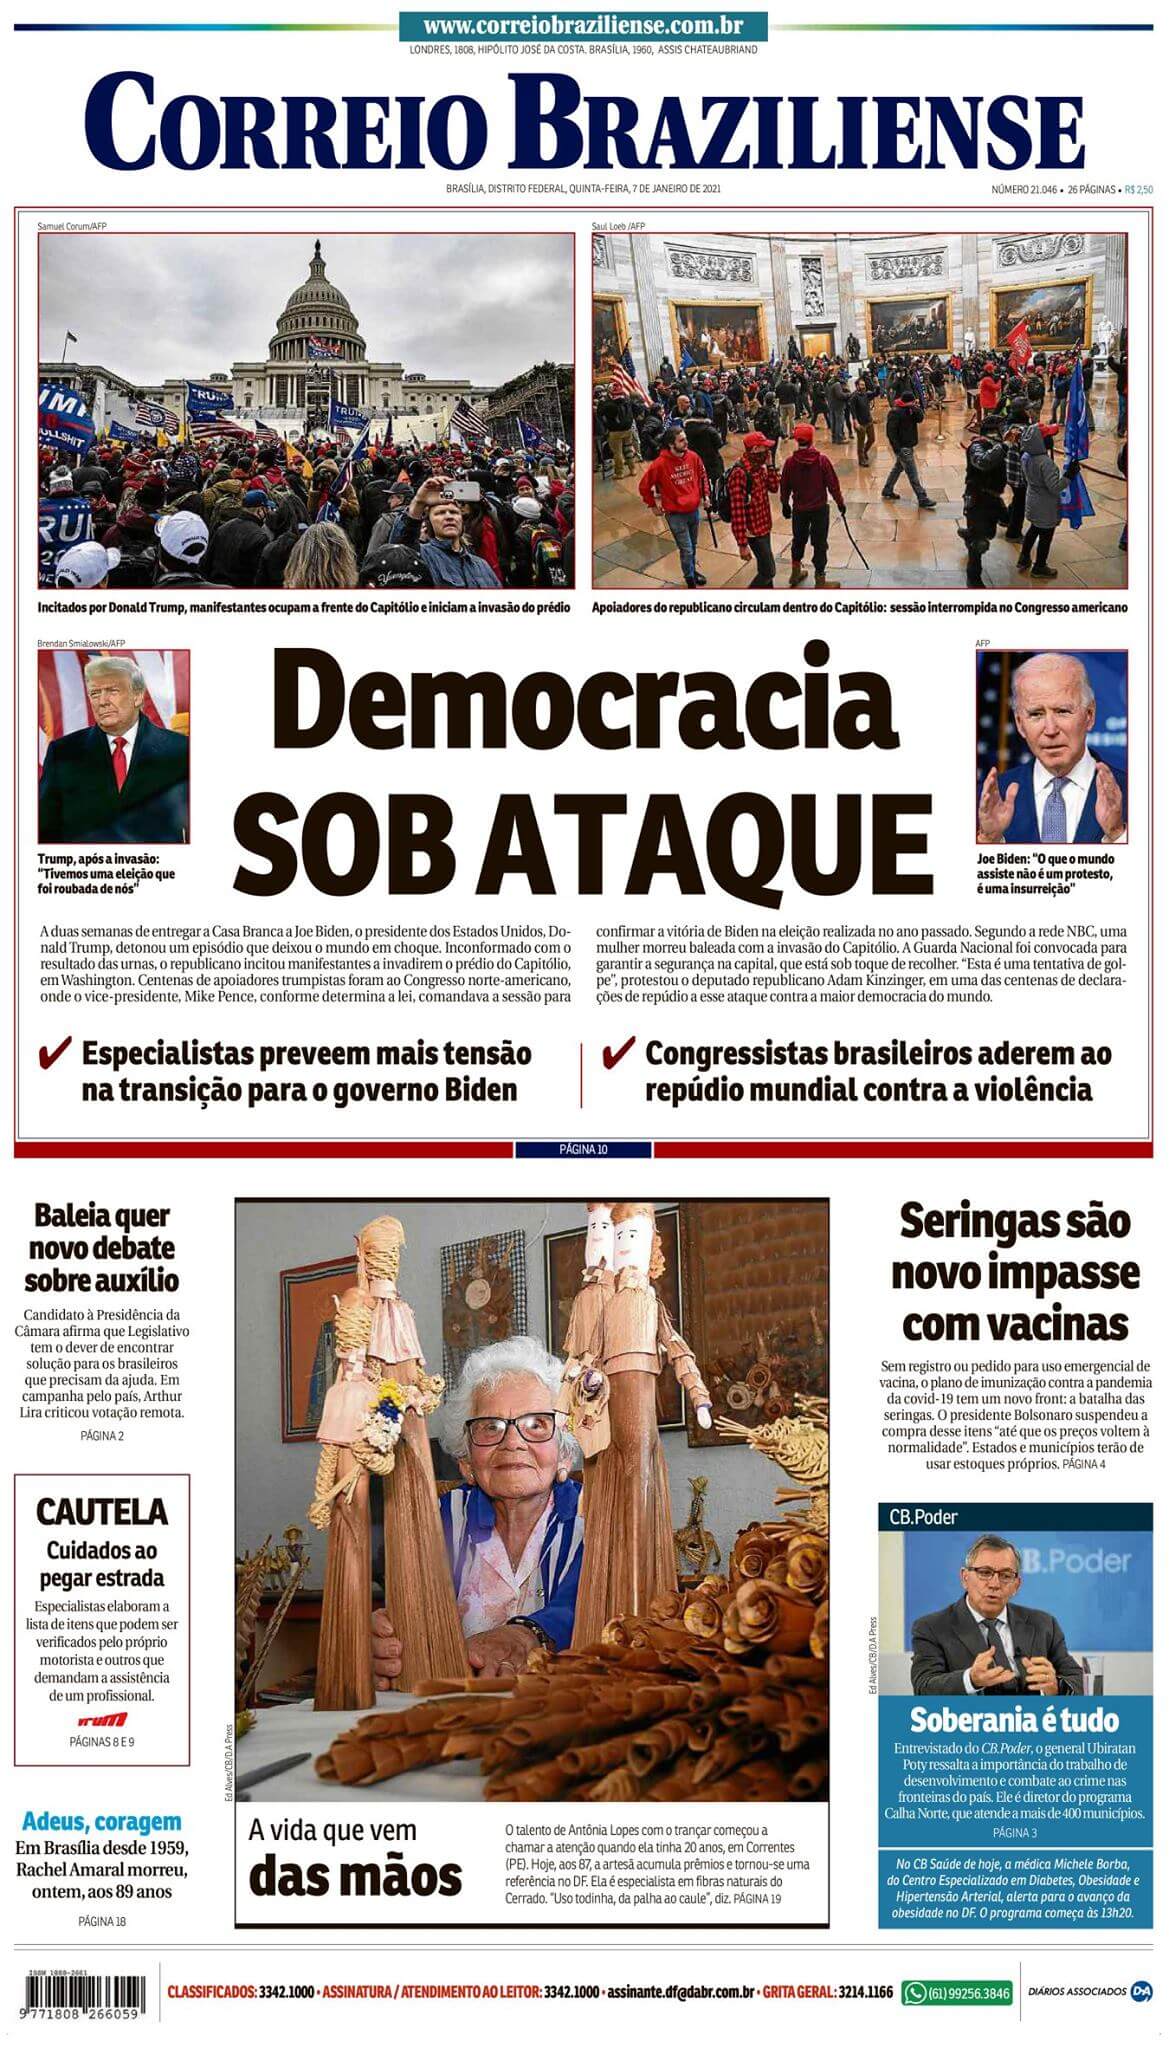 Brazil newspapers 16 Correio Braziliense